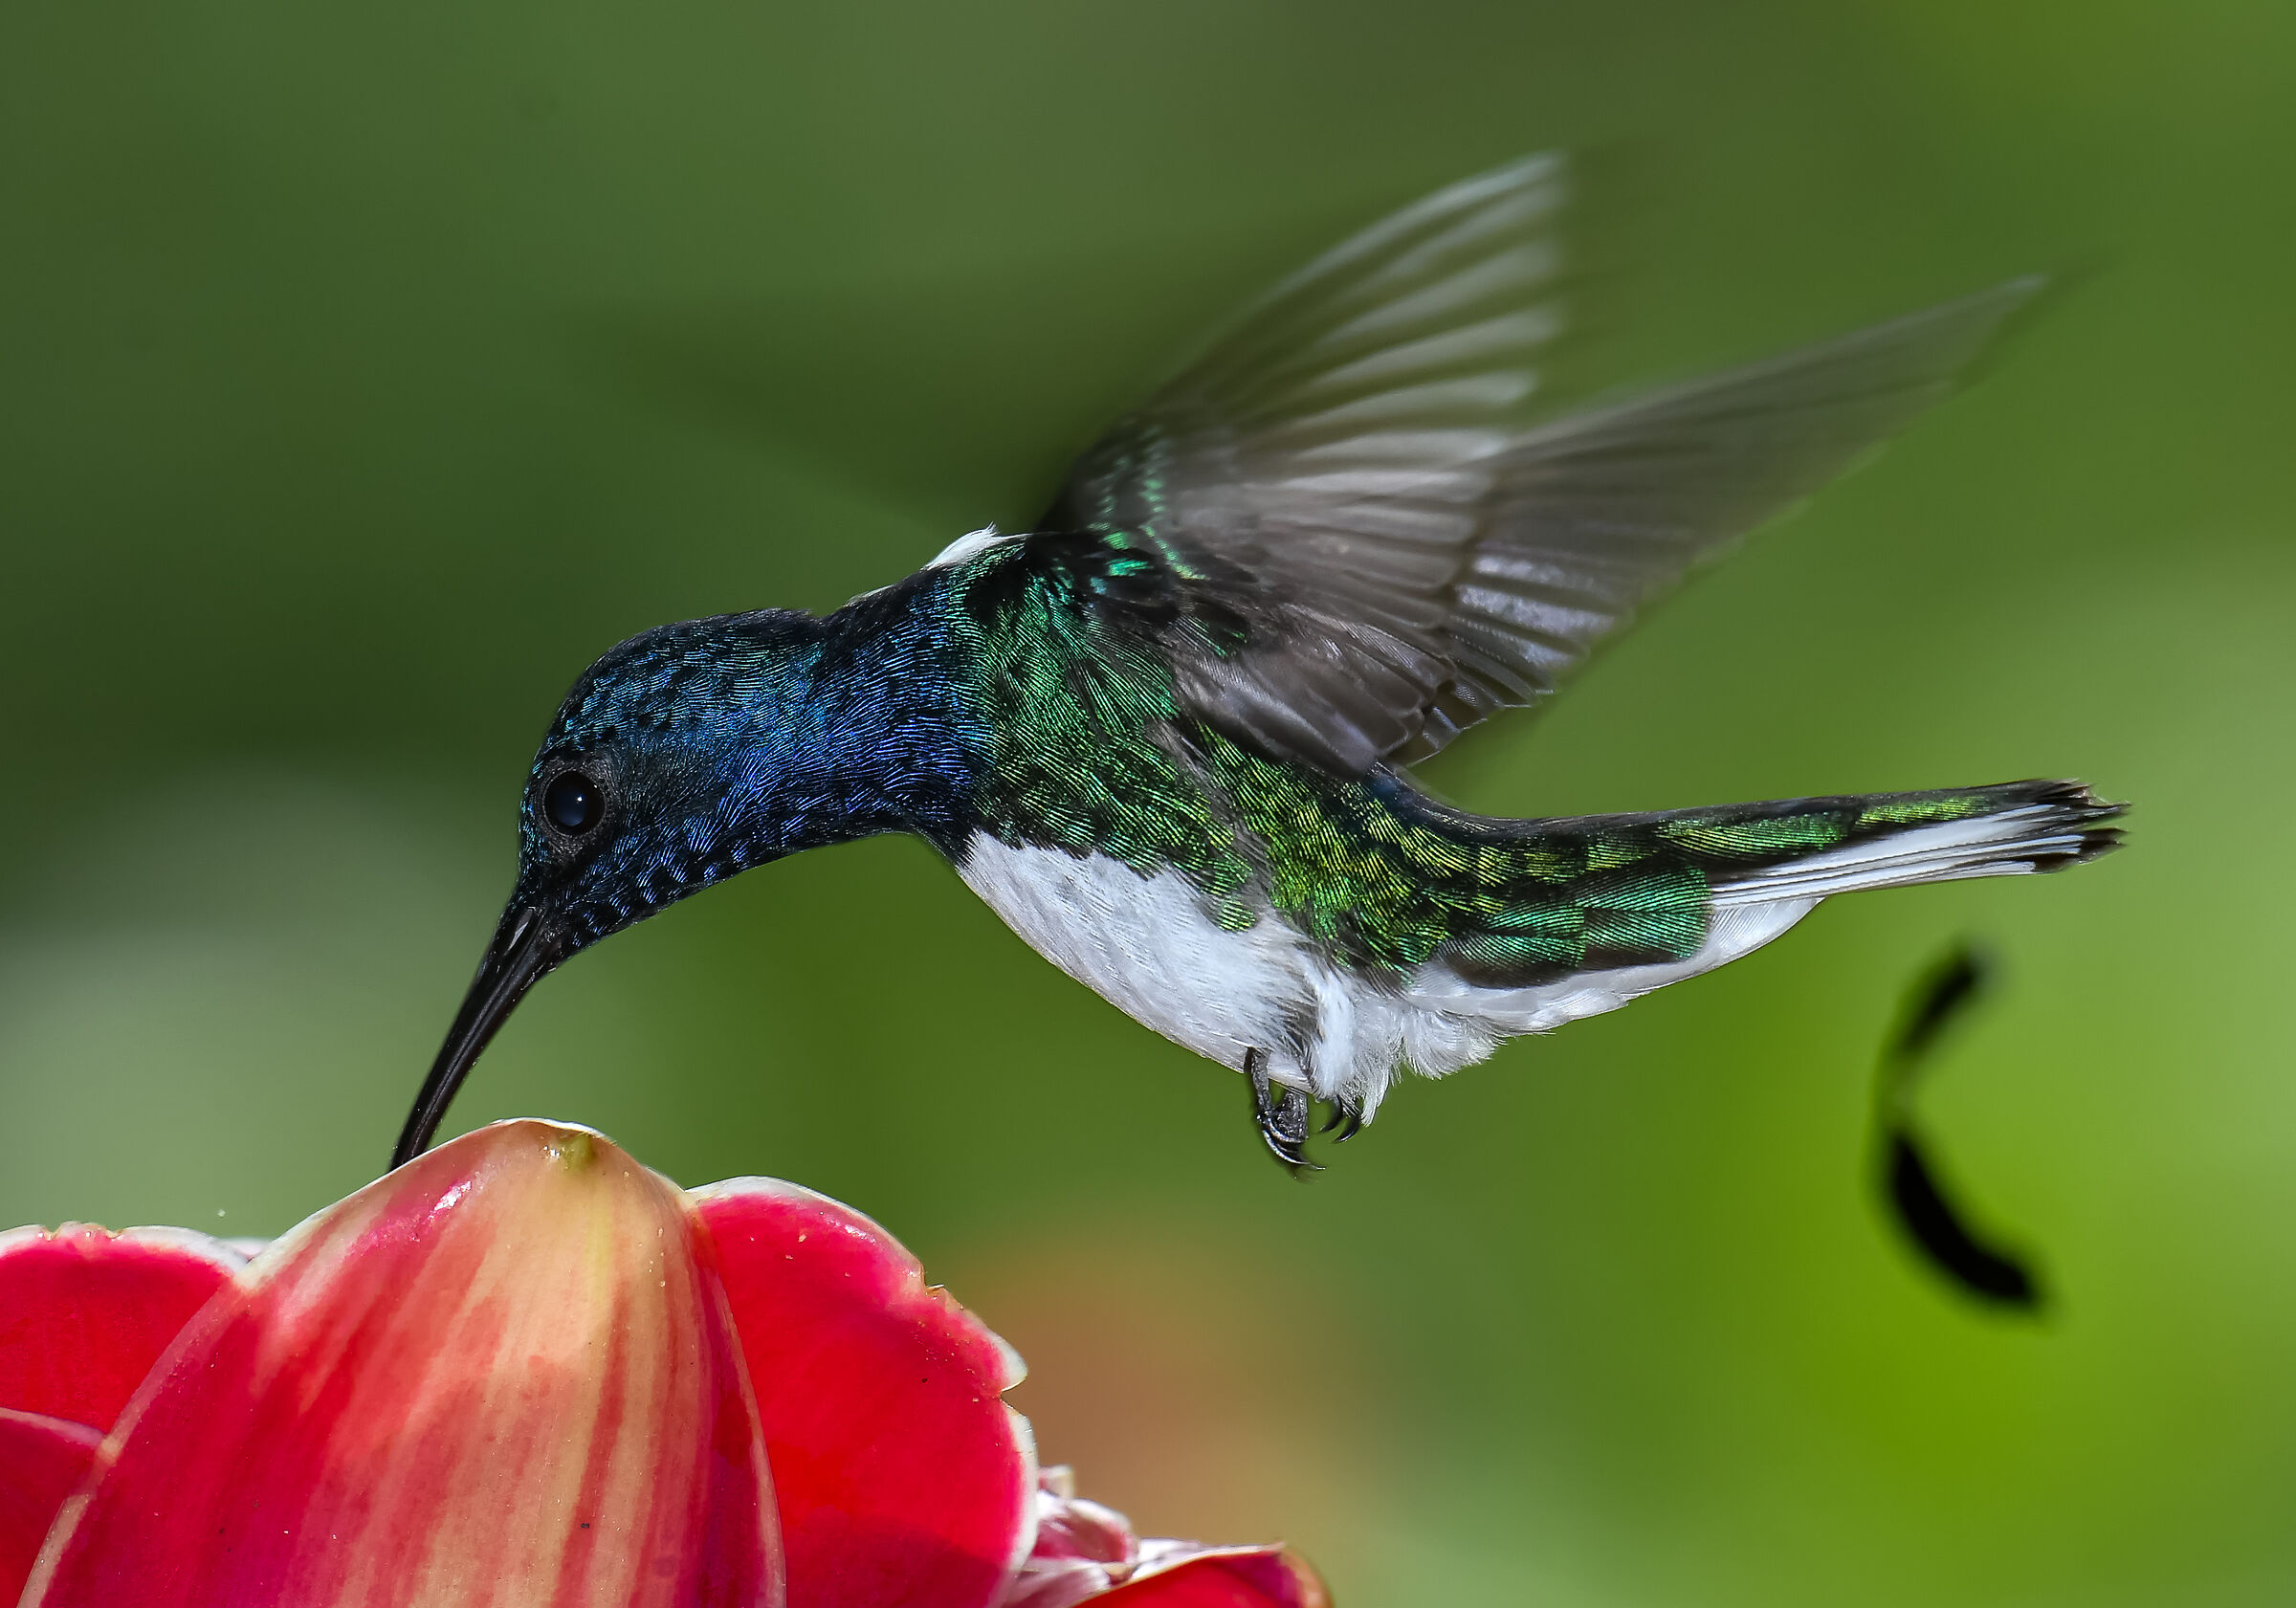 The flight of the hummingbird...